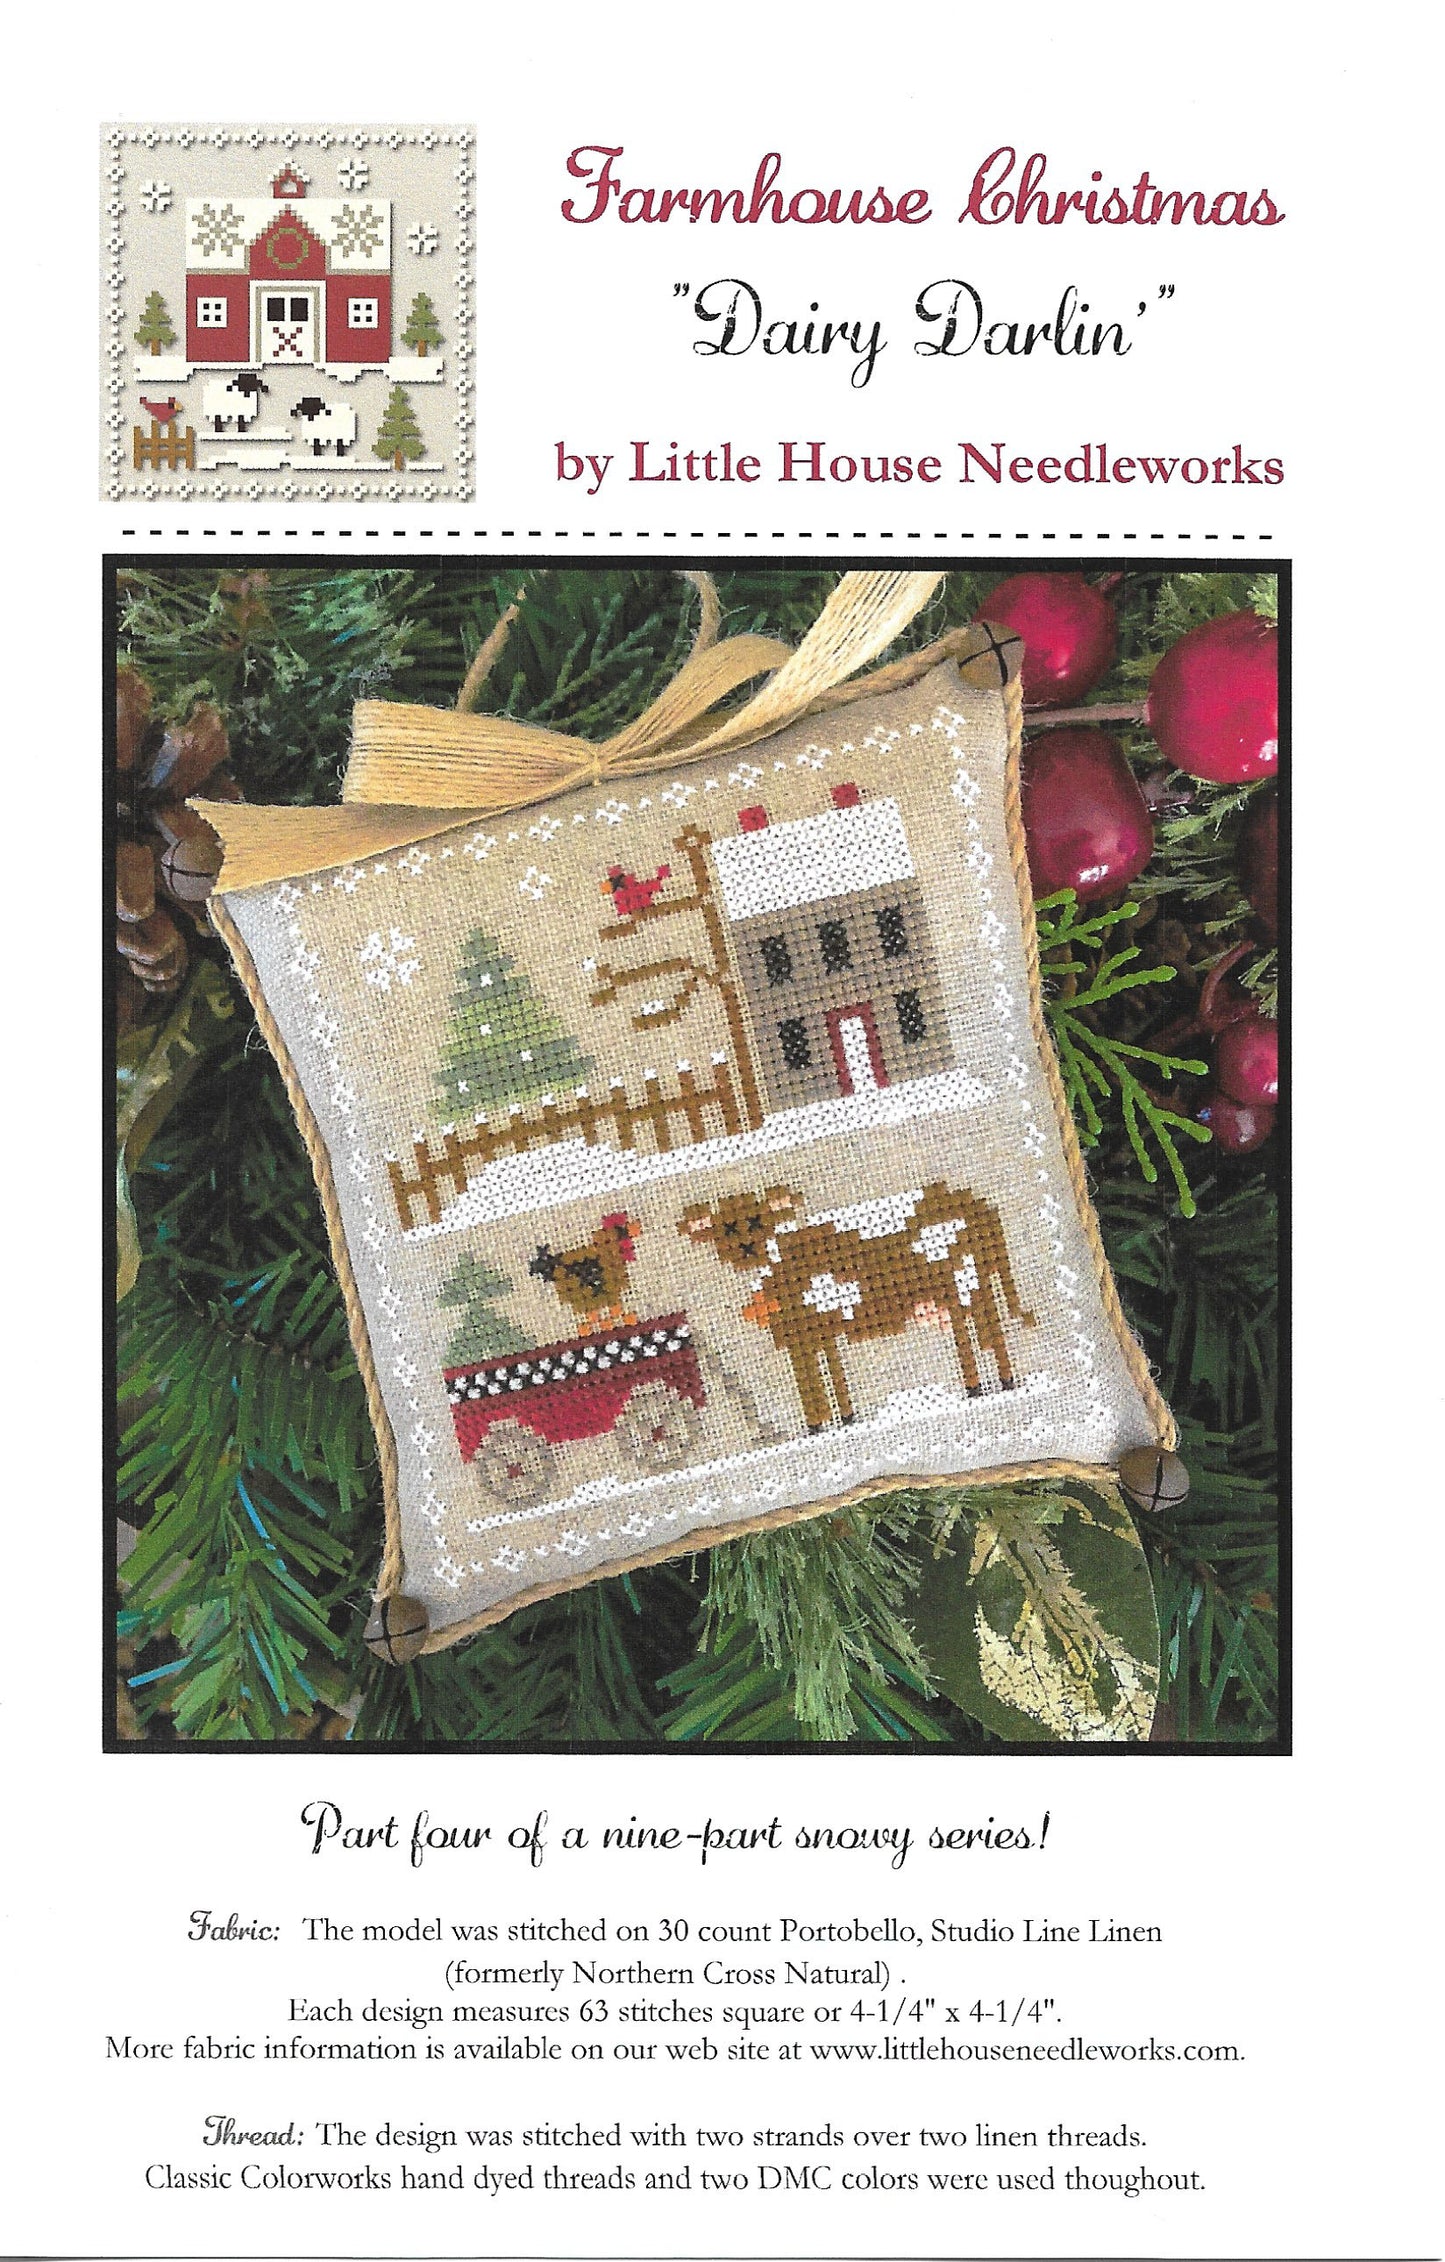 Little House Needleworks - Farmhouse Christmas Part 4 - Dairy Darlin'